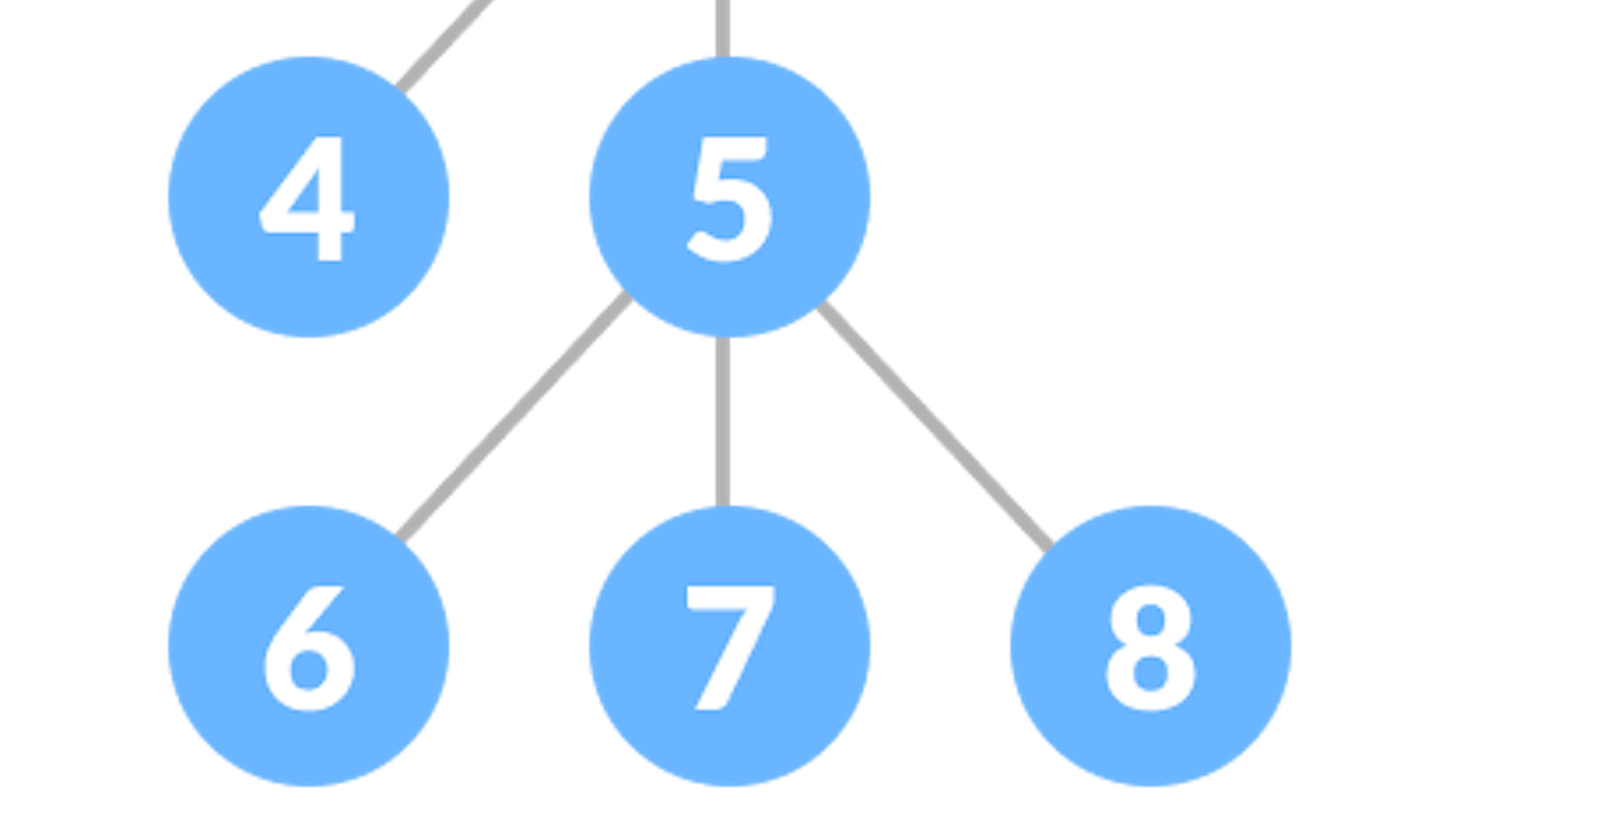 Tree data structure (Javascript)